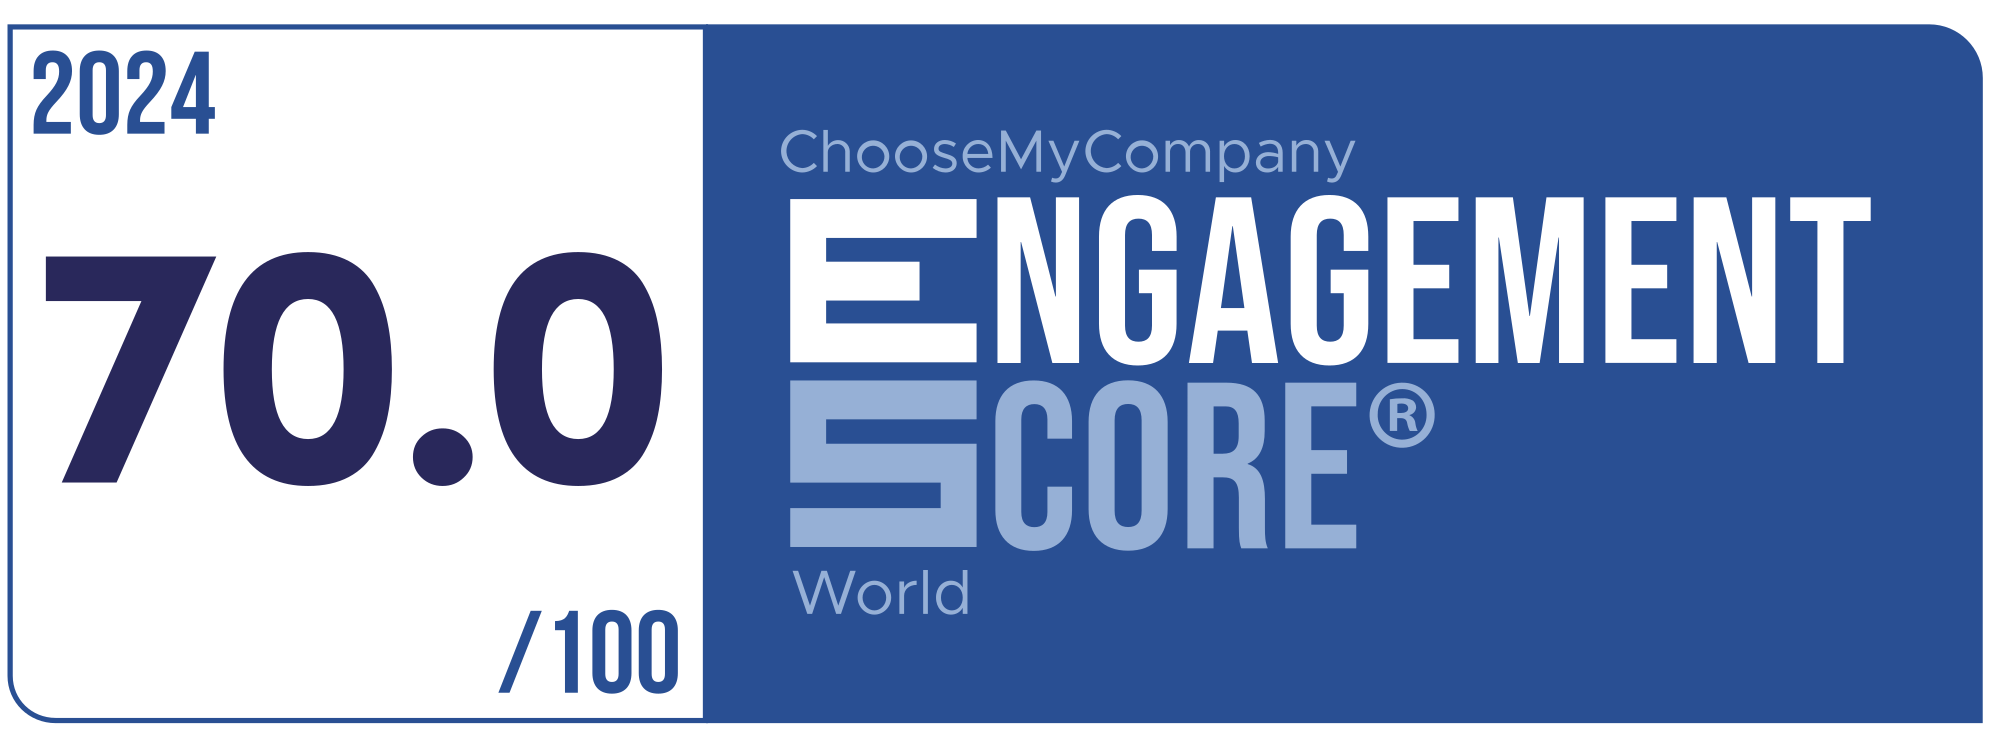 Label Engagement Score 2024 World